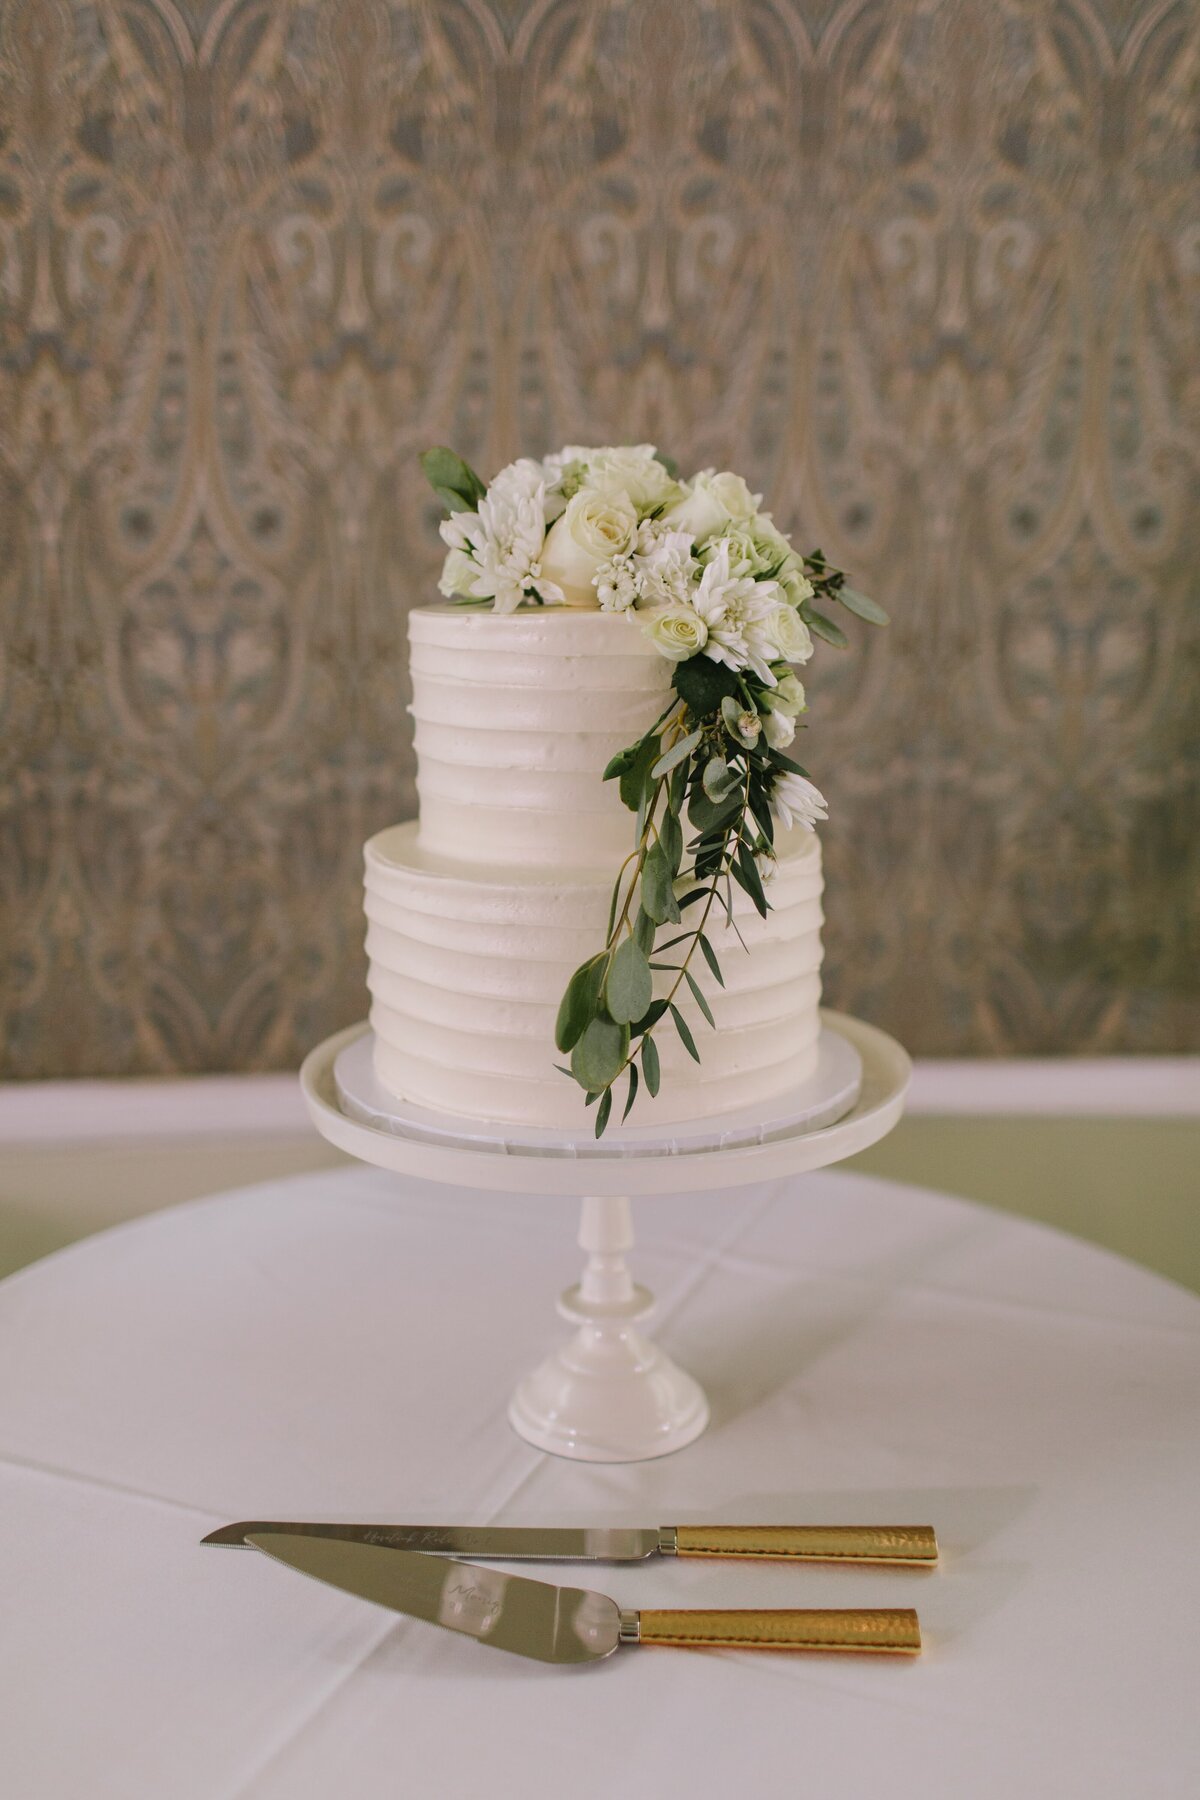 Sandra-Bettina-Events-Fairmont-Macdonald-Wedding-Cake